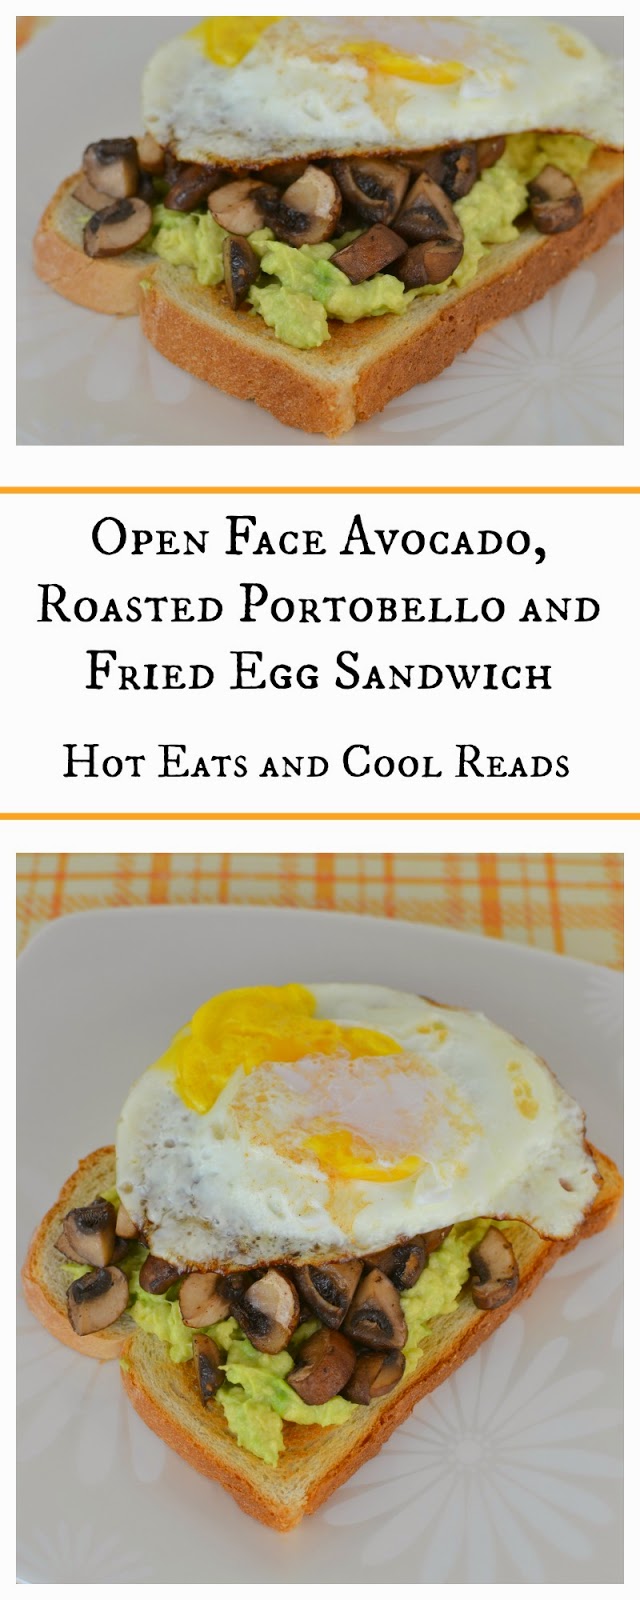 Open Face Avocado, Roasted Portobello and Fried Egg Sandwich Recipe